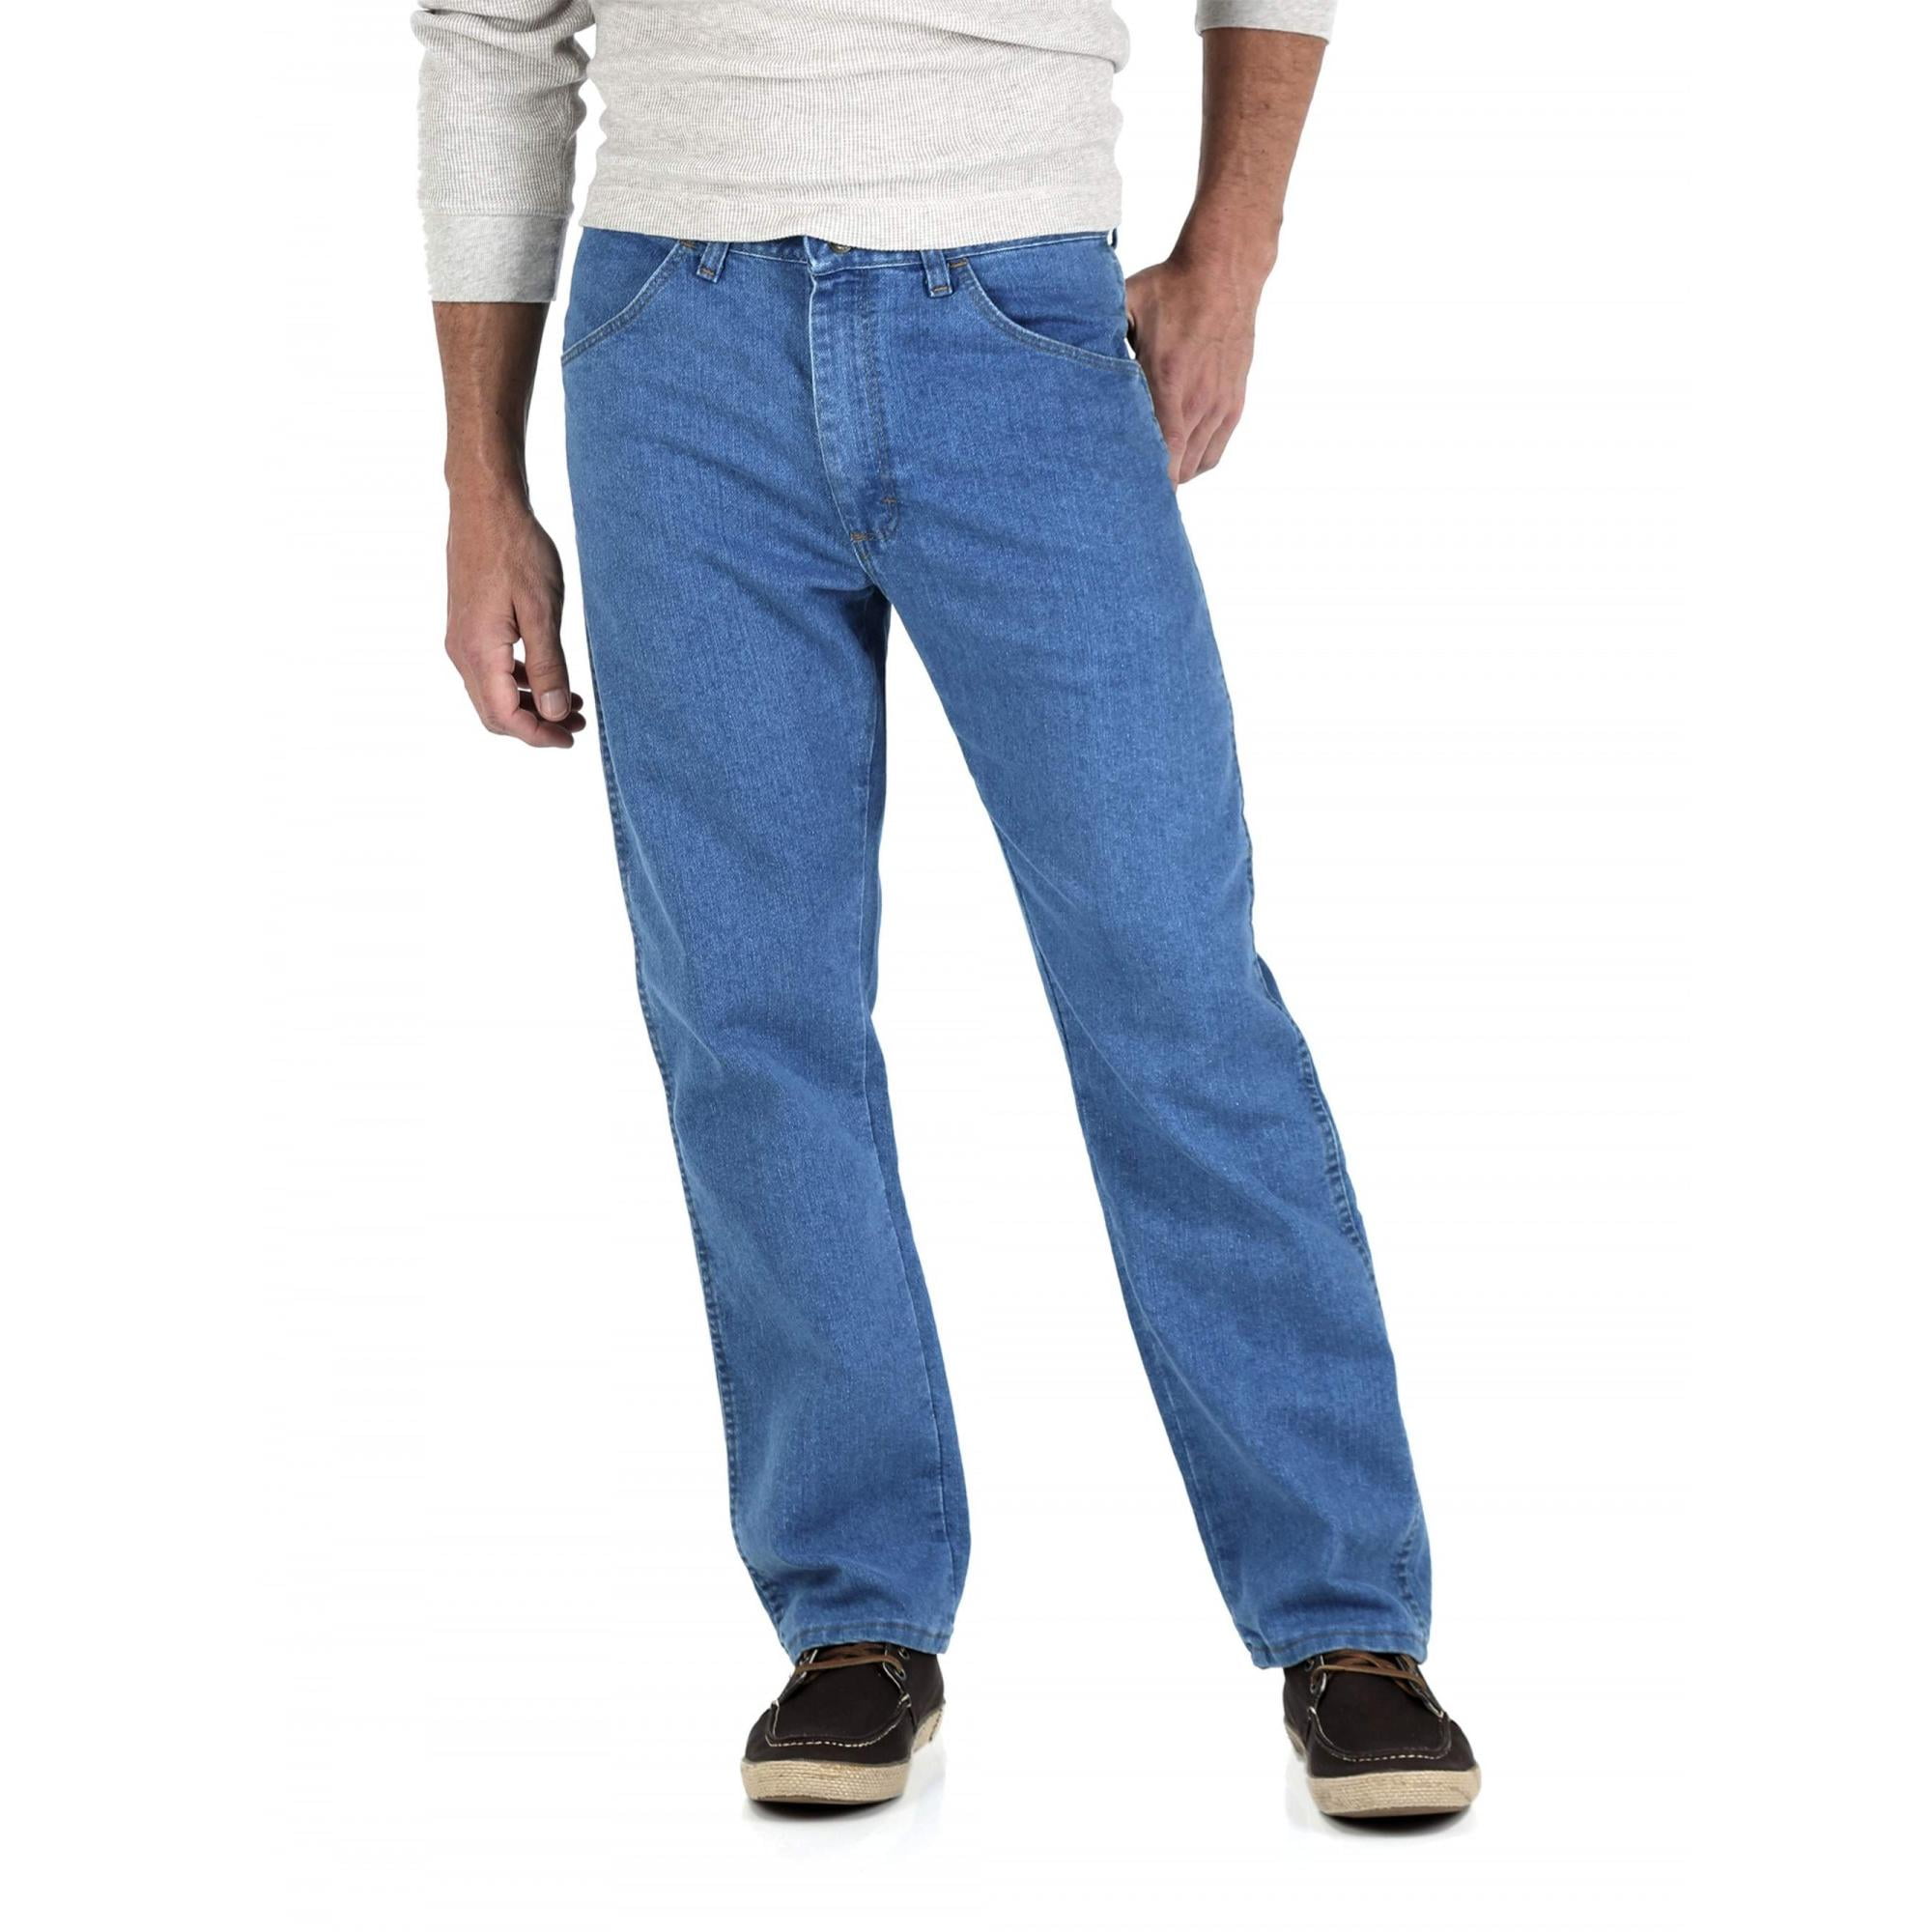 Wrangler Men's Regular Fit Stretch Jeans 